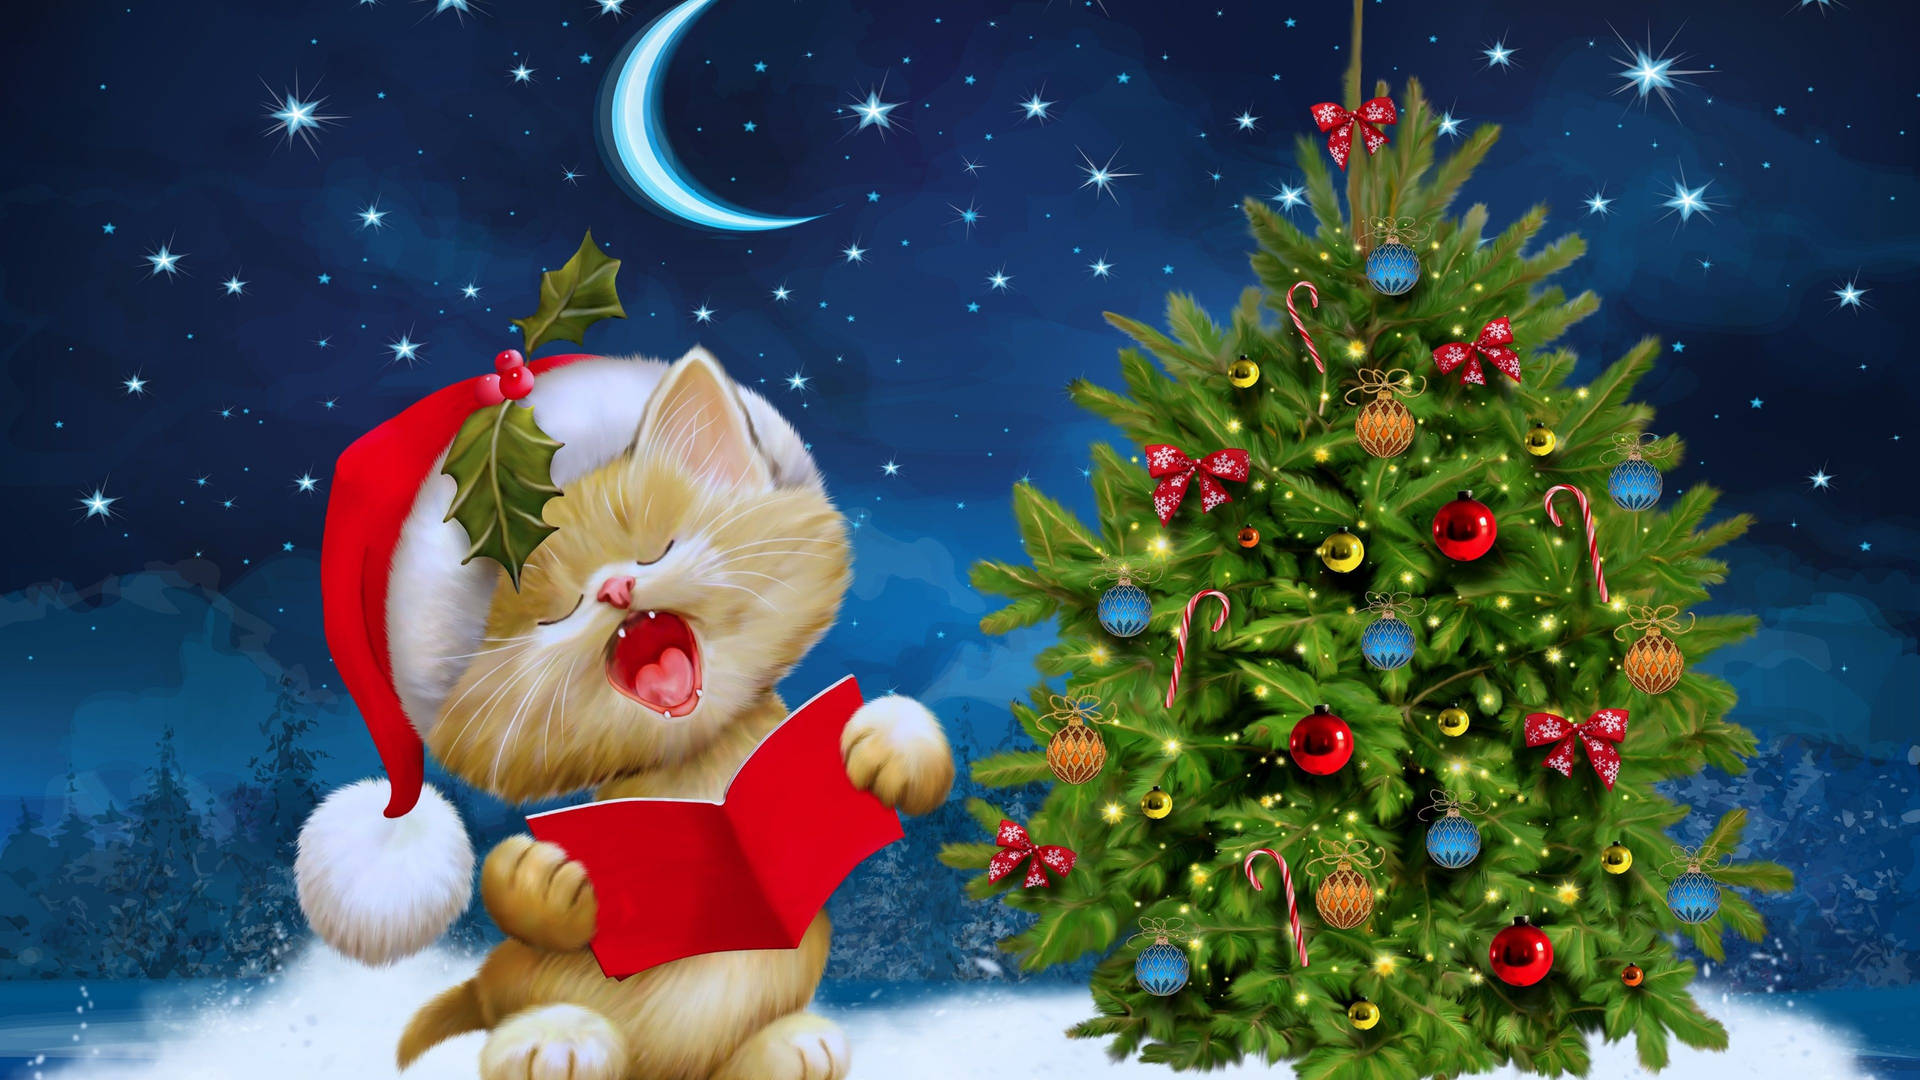 Adorable kitten in a festive Santa hat celebrating Christmas in 4K Ultra HD. Wallpaper